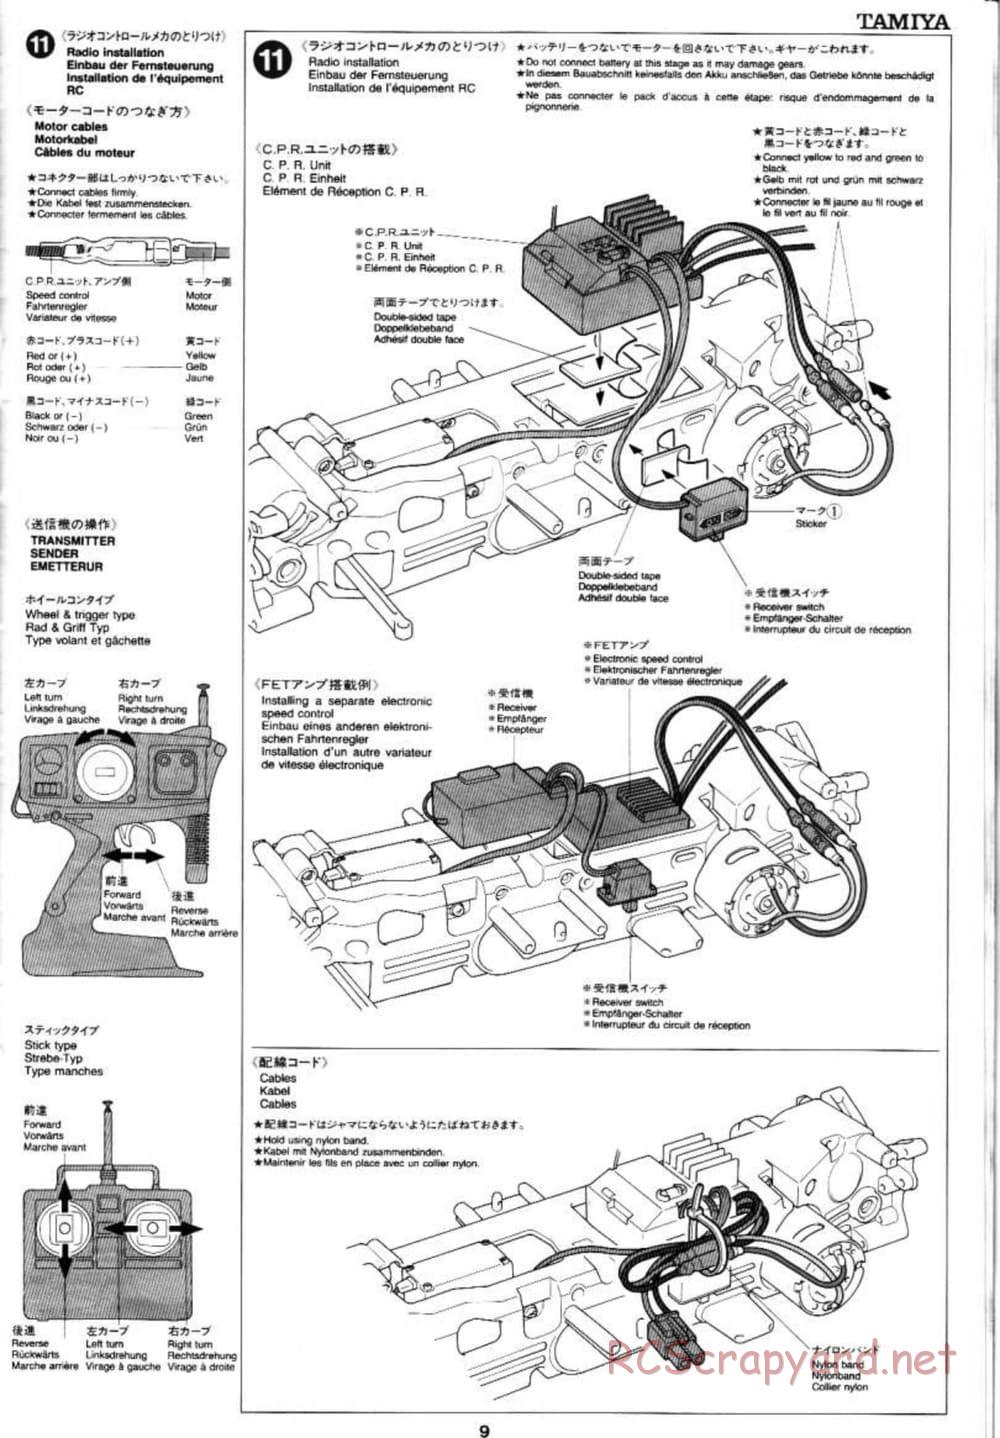 Tamiya - Peugeot 406 ST - TL-01 Chassis - Manual - Page 9